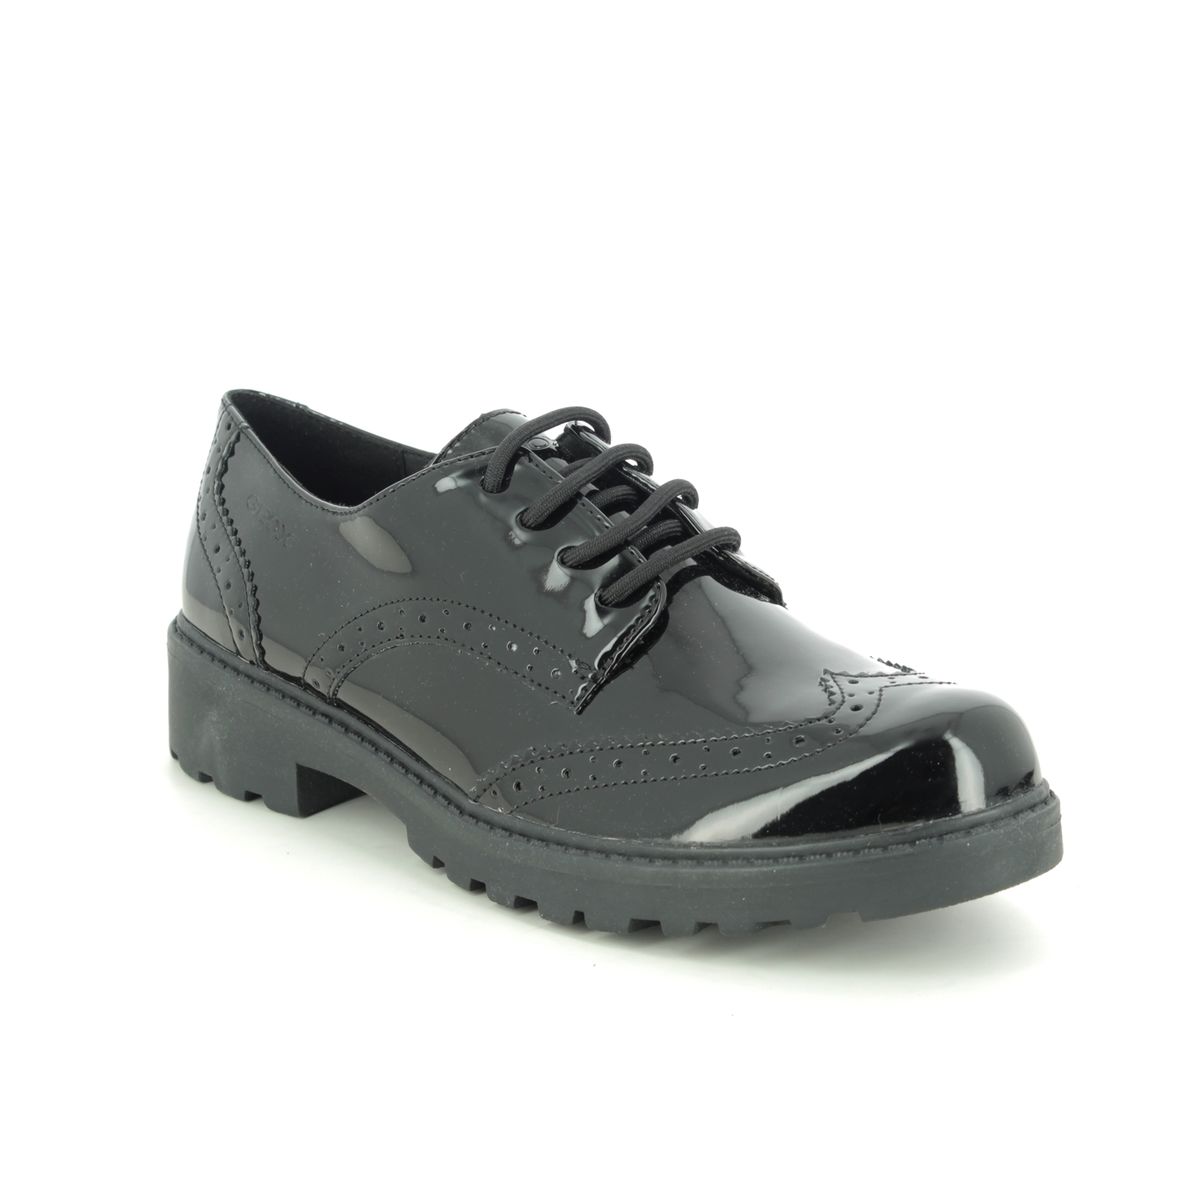 Geox Casey Lace Black patent Kids girls school shoes J6420N-C9999 in a Plain  in Size 37